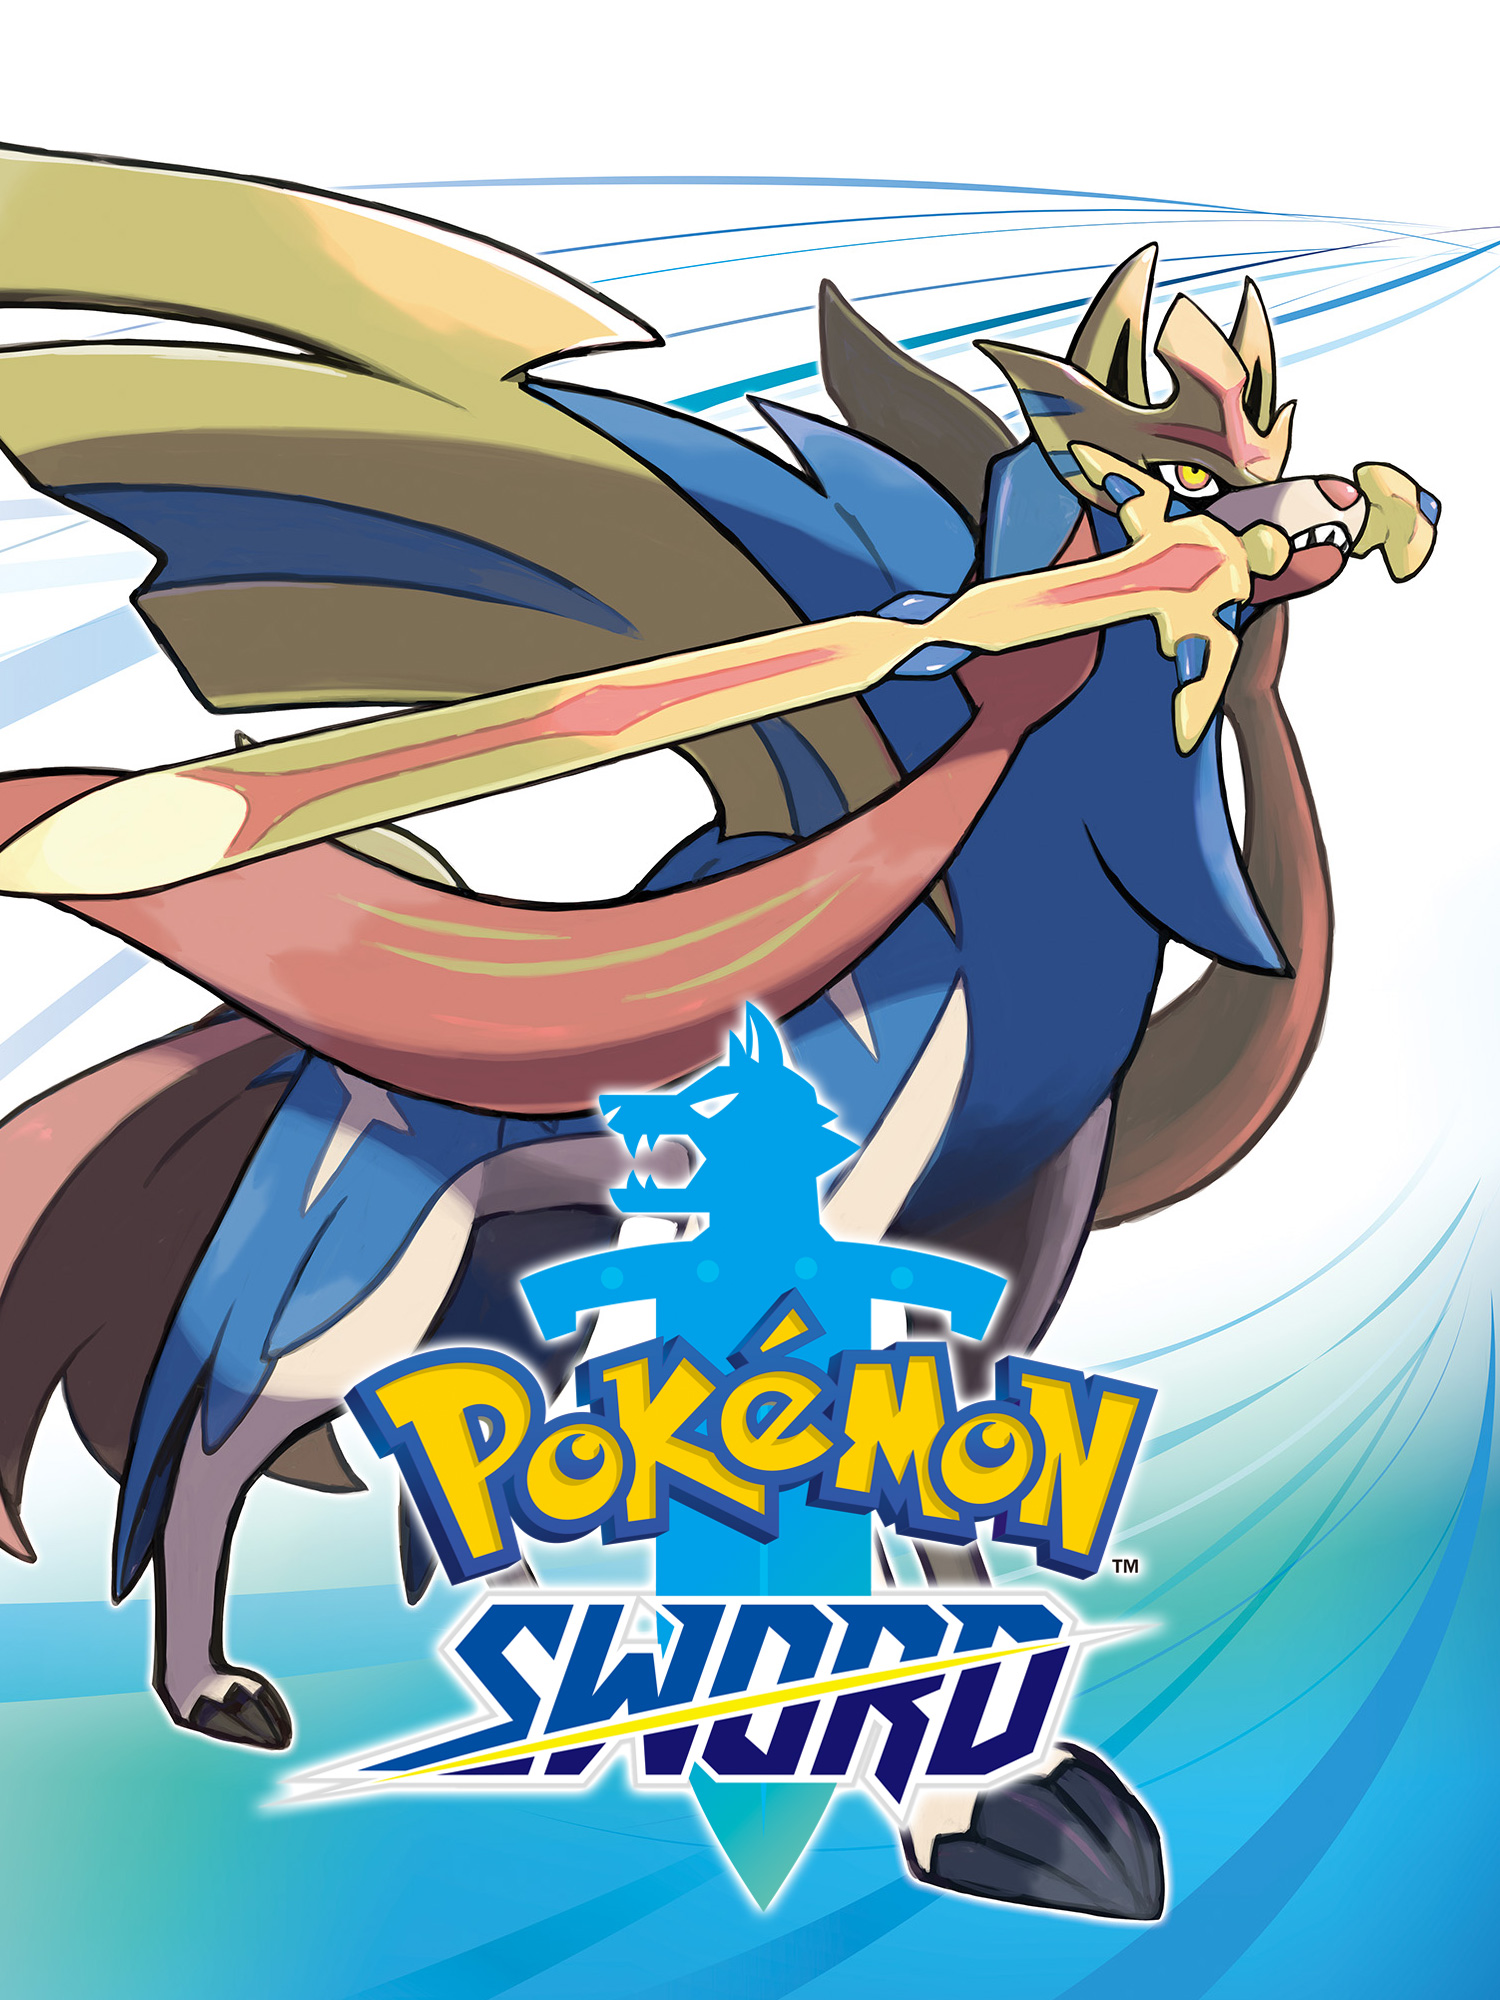 Meet Sirfetch'd in Pokémon Sword! ⚔️ 